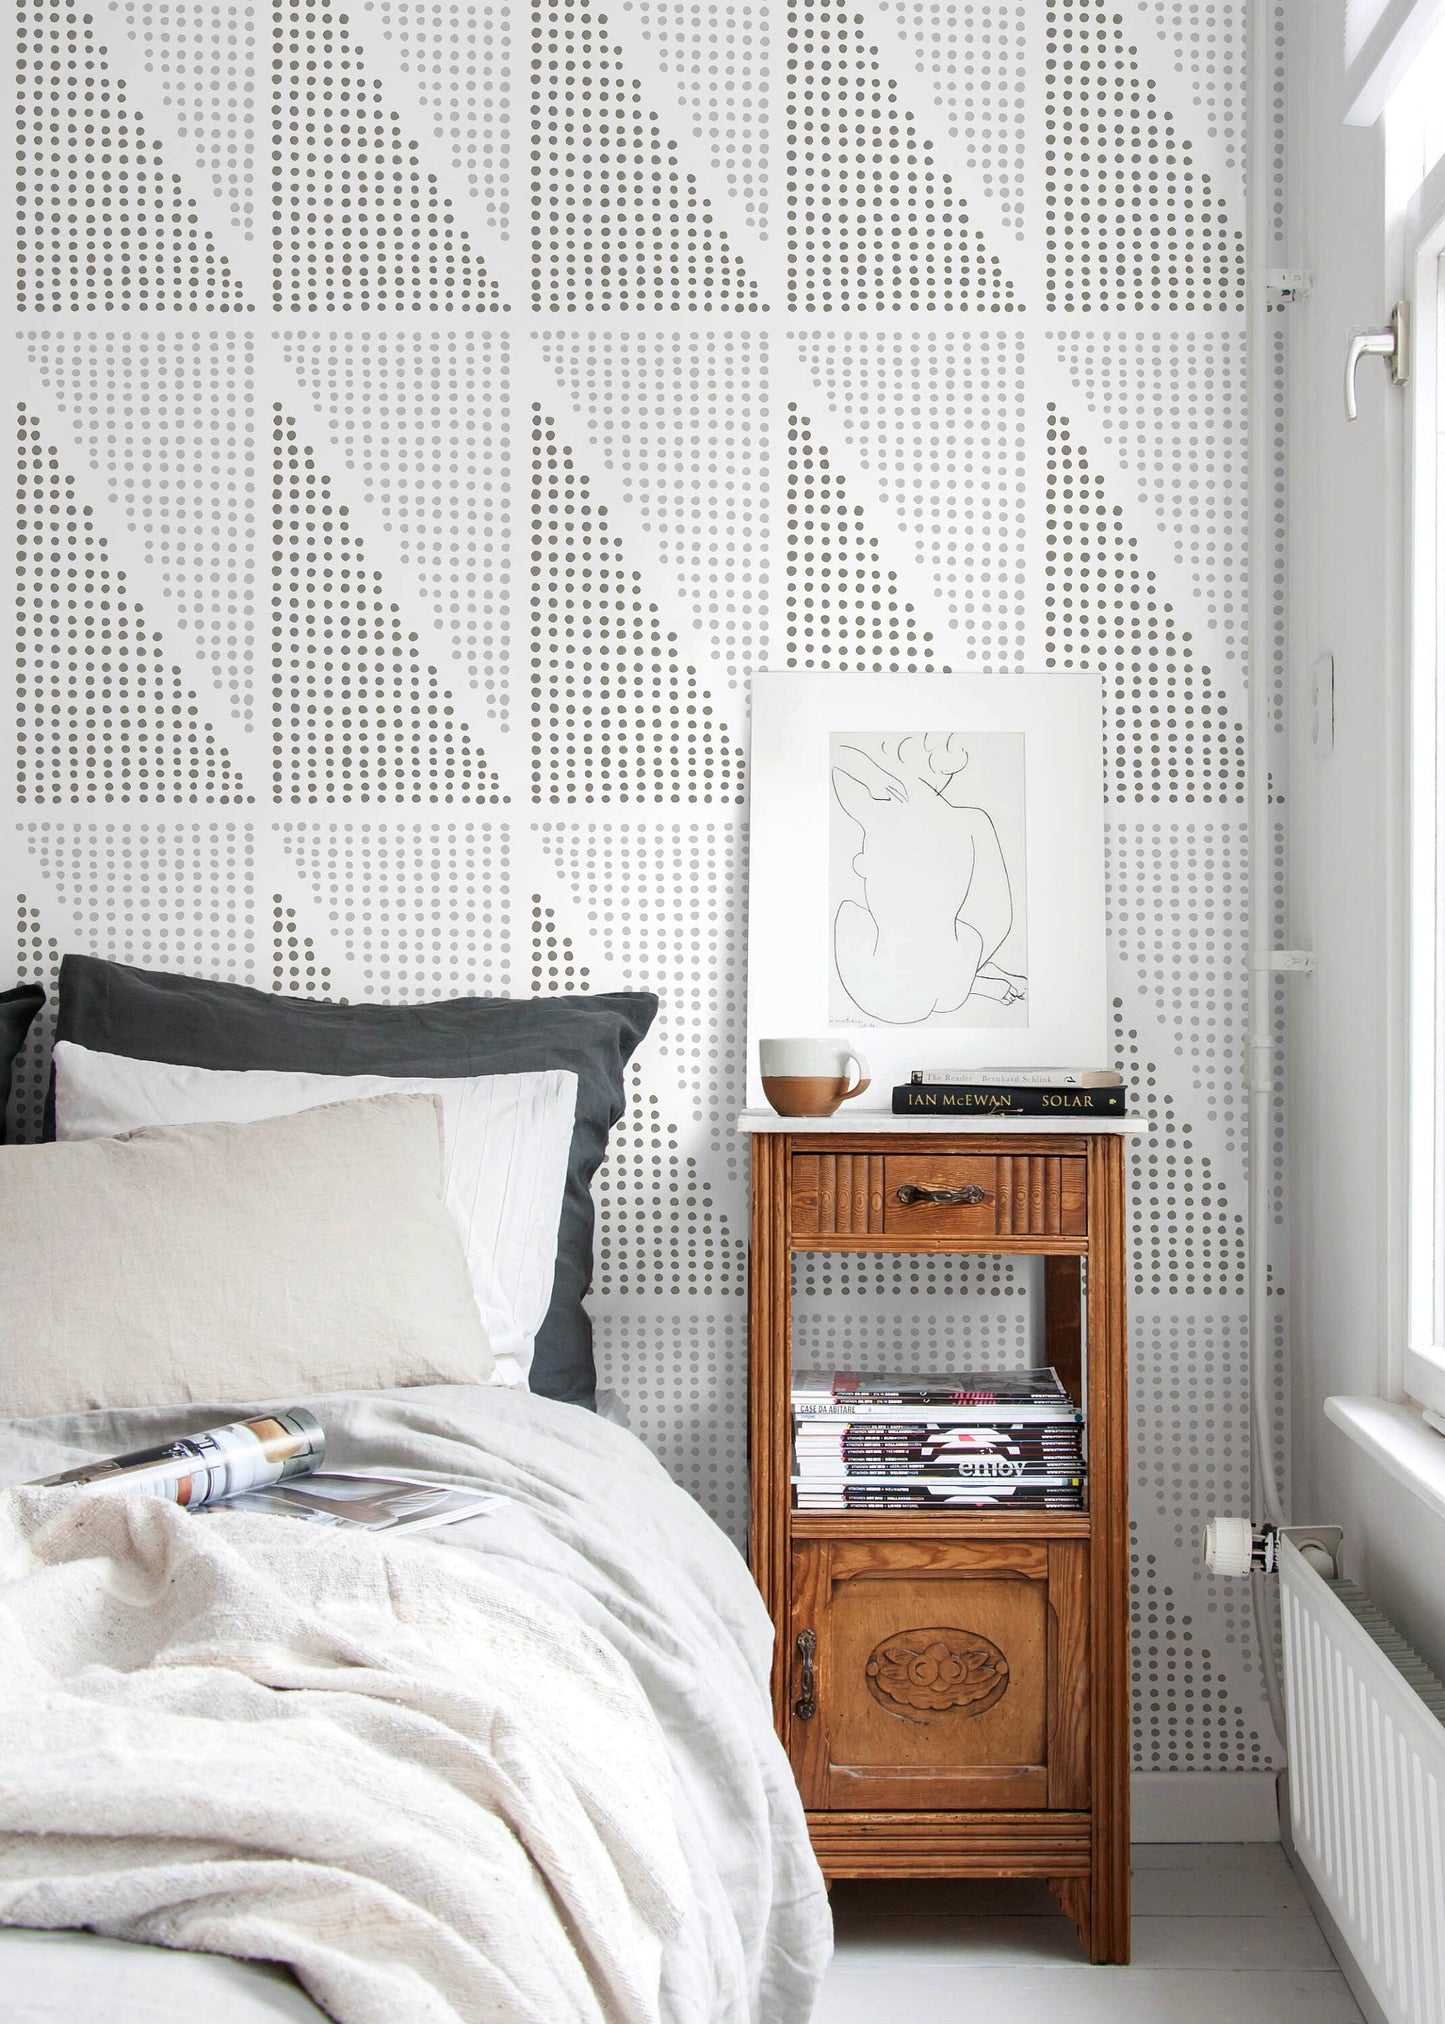 Gray Geometric Dots Wallpaper / Peel and Stick Wallpaper Removable Wallpaper Home Decor Wall Art Wall Decor Room Decor - C970